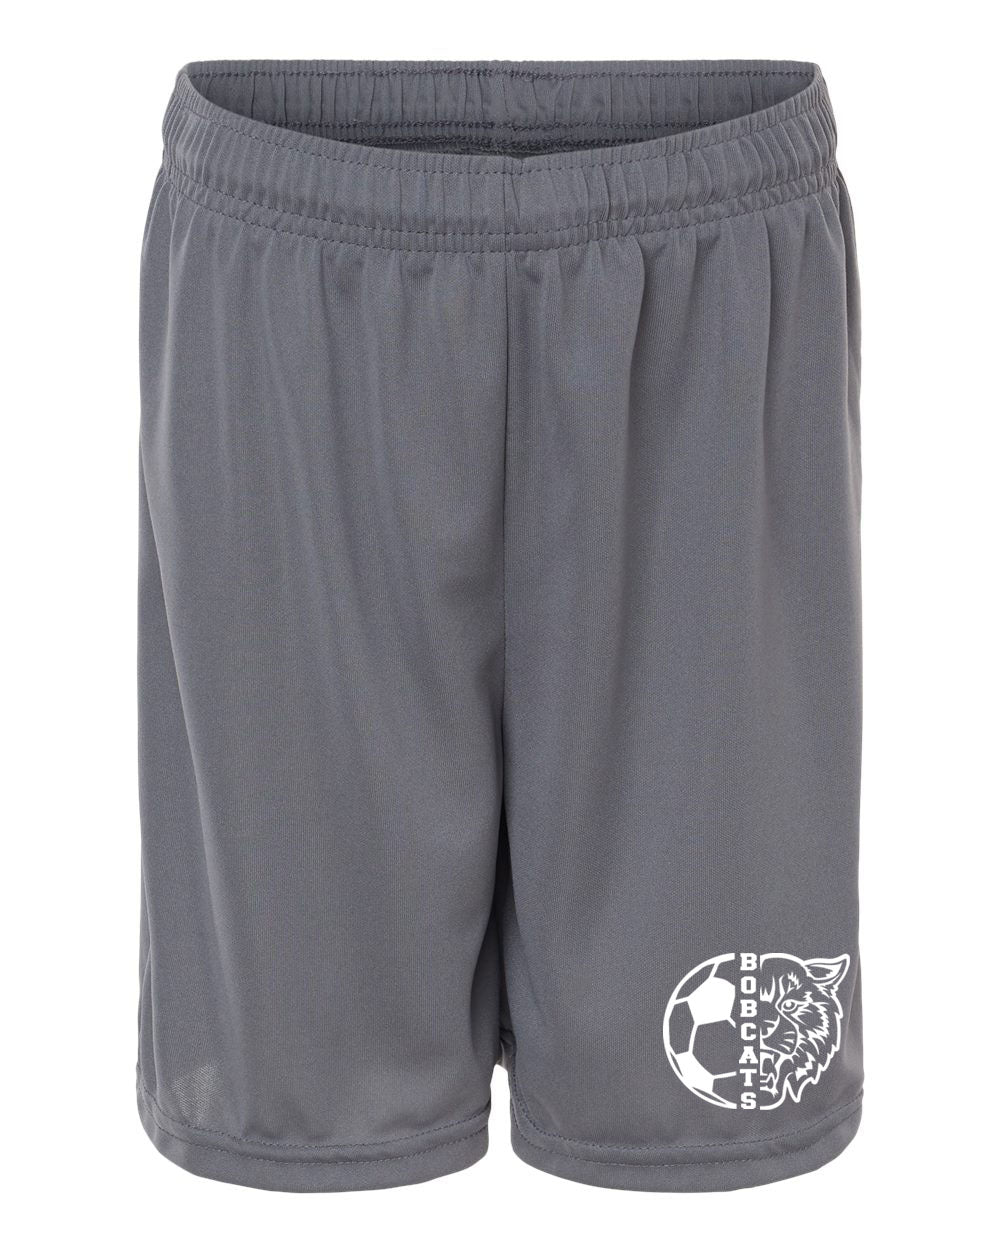 Sandyston Soccer Design 1 Shorts